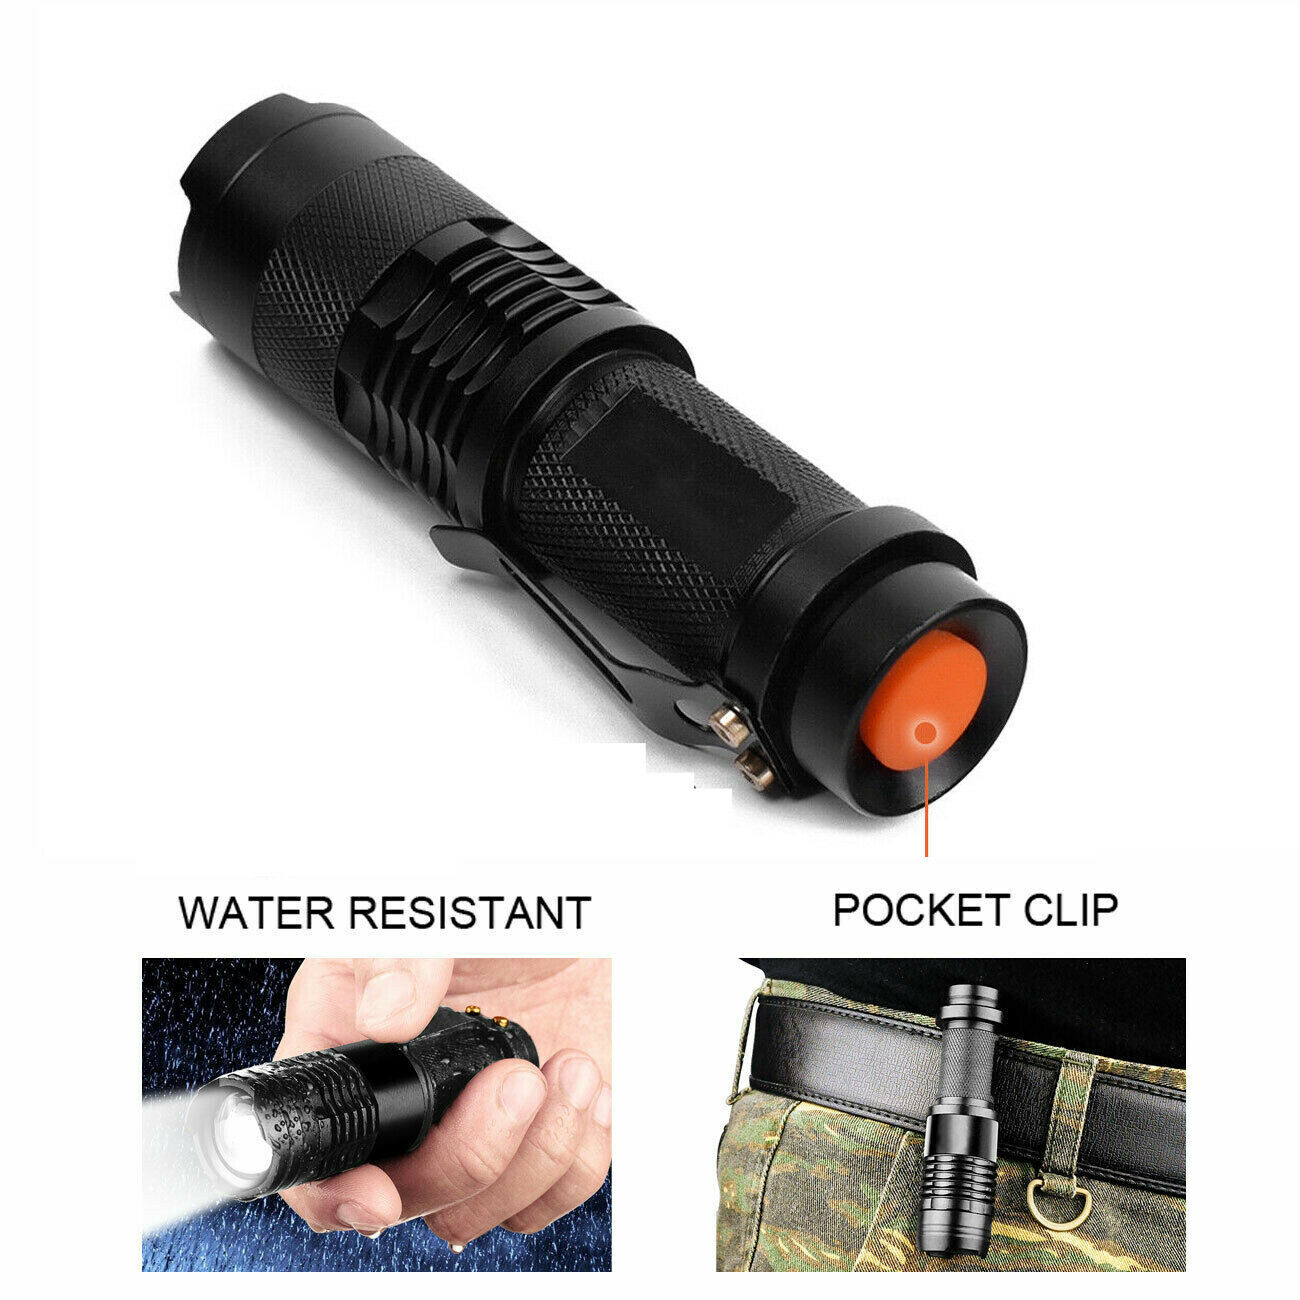 LED Tactical Flashlight Military Grade Torch Small Super Bright Handheld Light